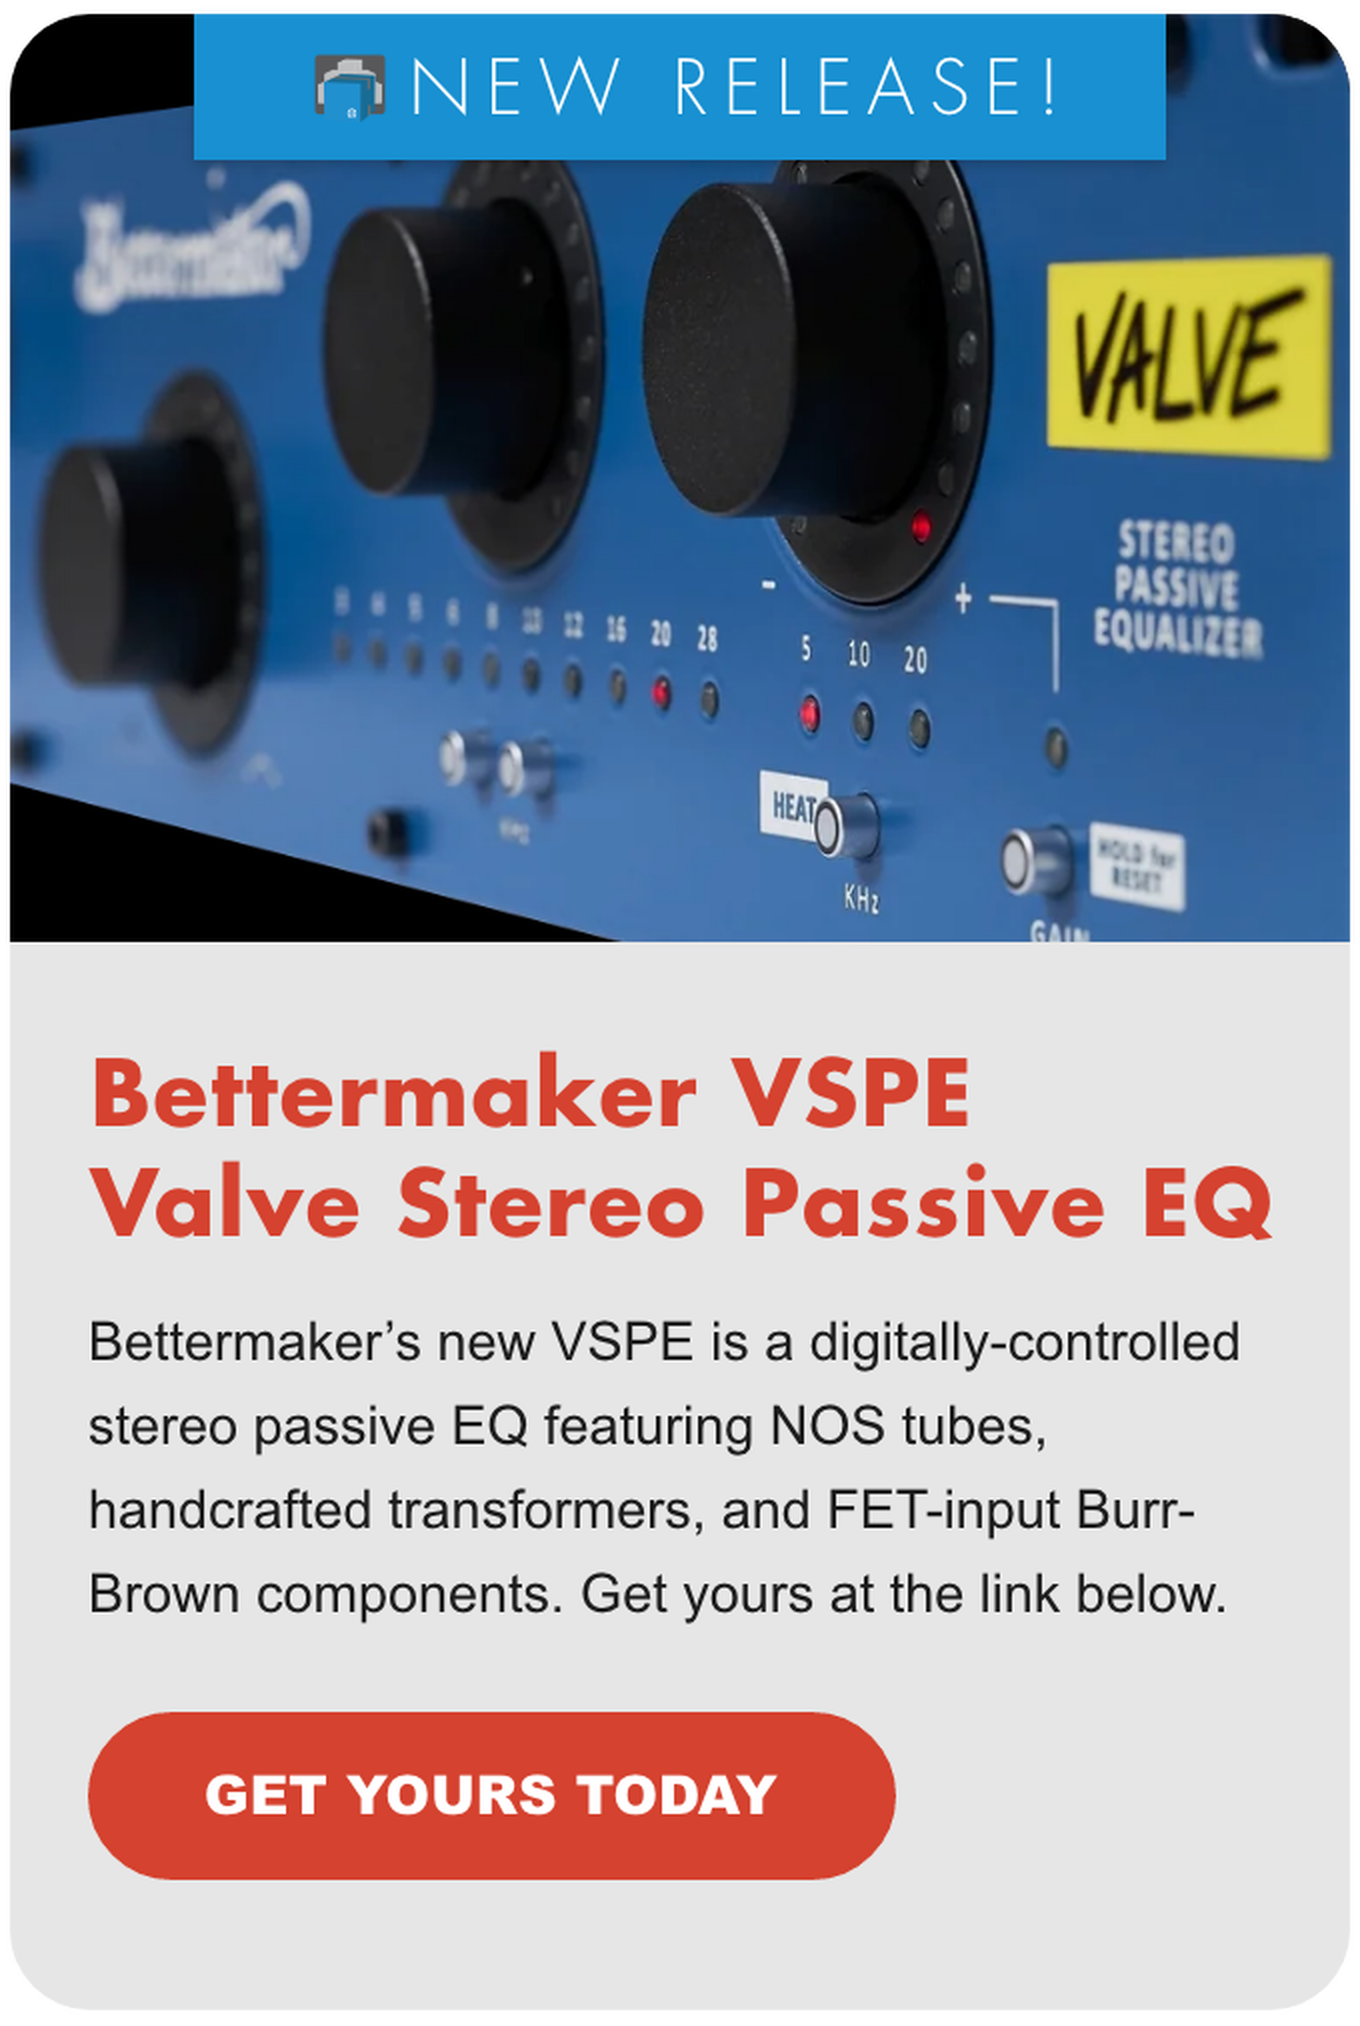 NEW! Bettermaker VSPE Valve Stereo Passive EQ